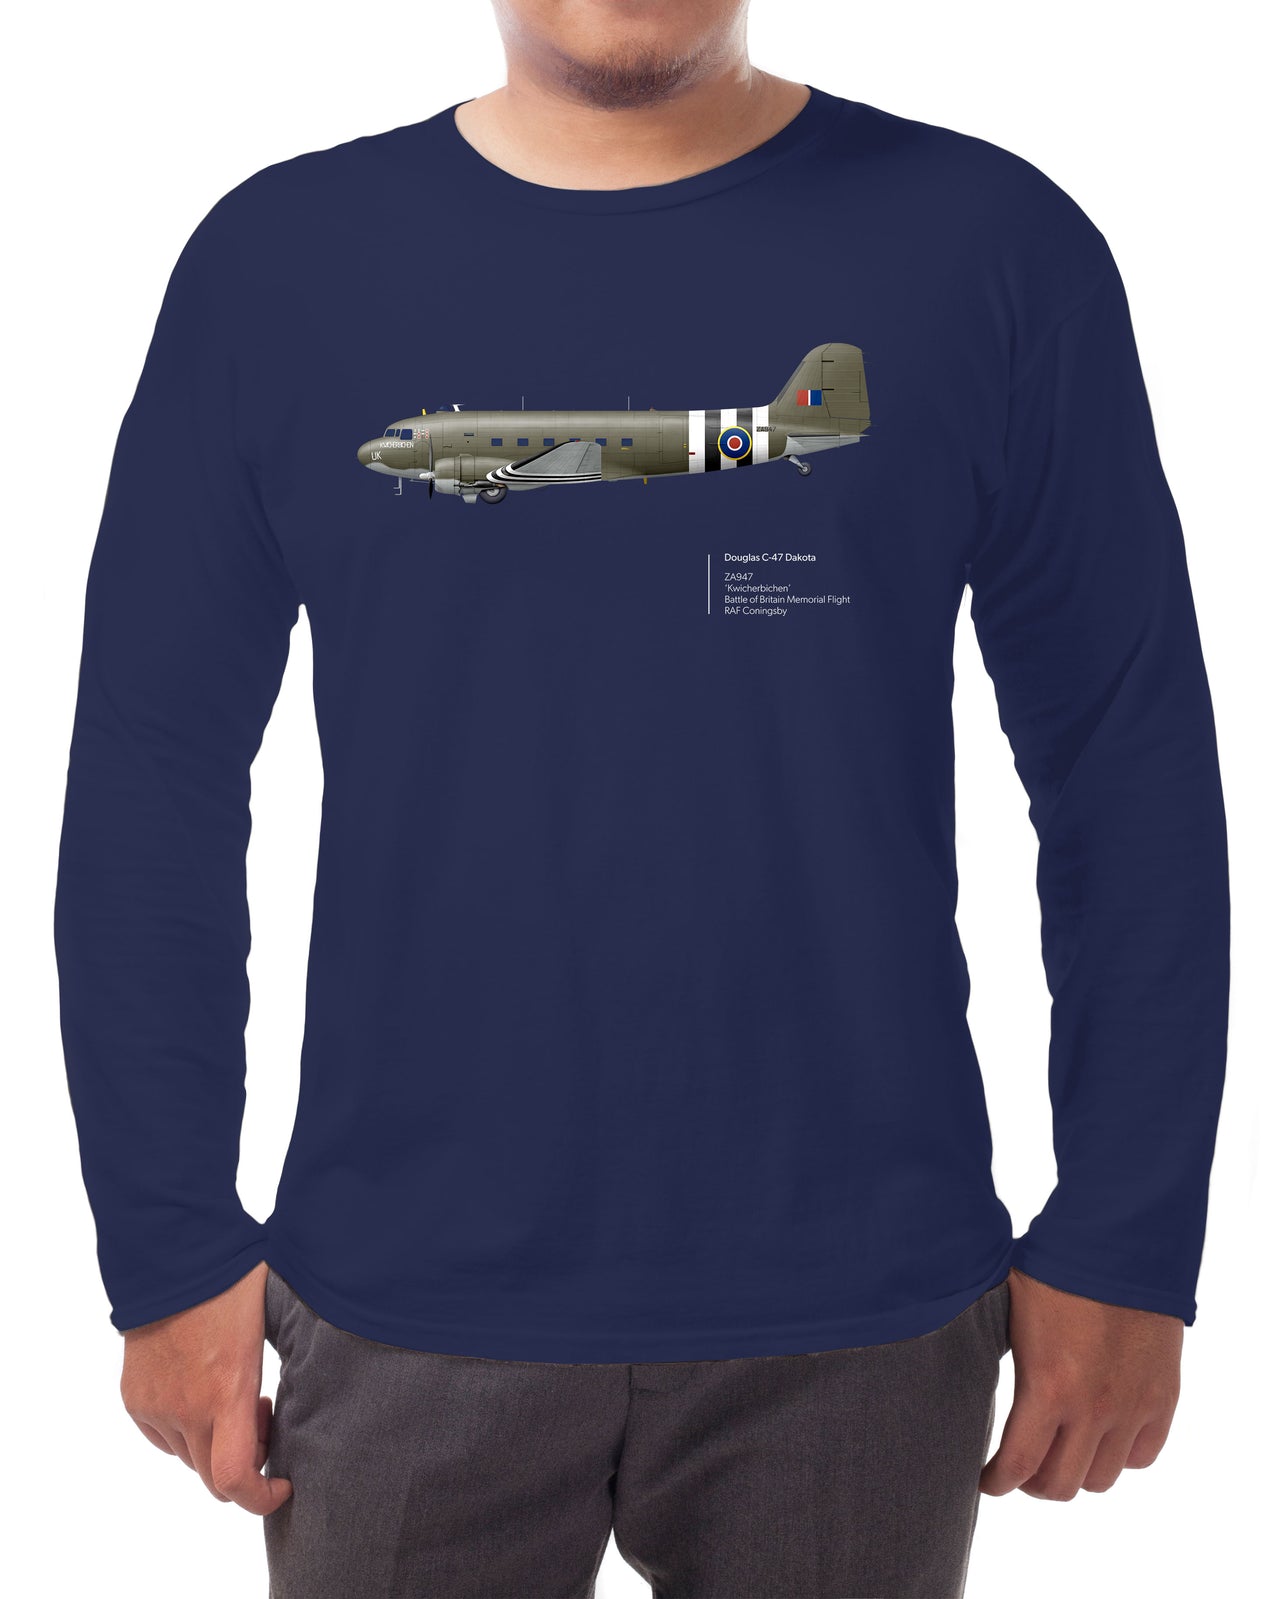 BBMF Douglas C-47 Dakota - Long-sleeve T-shirt